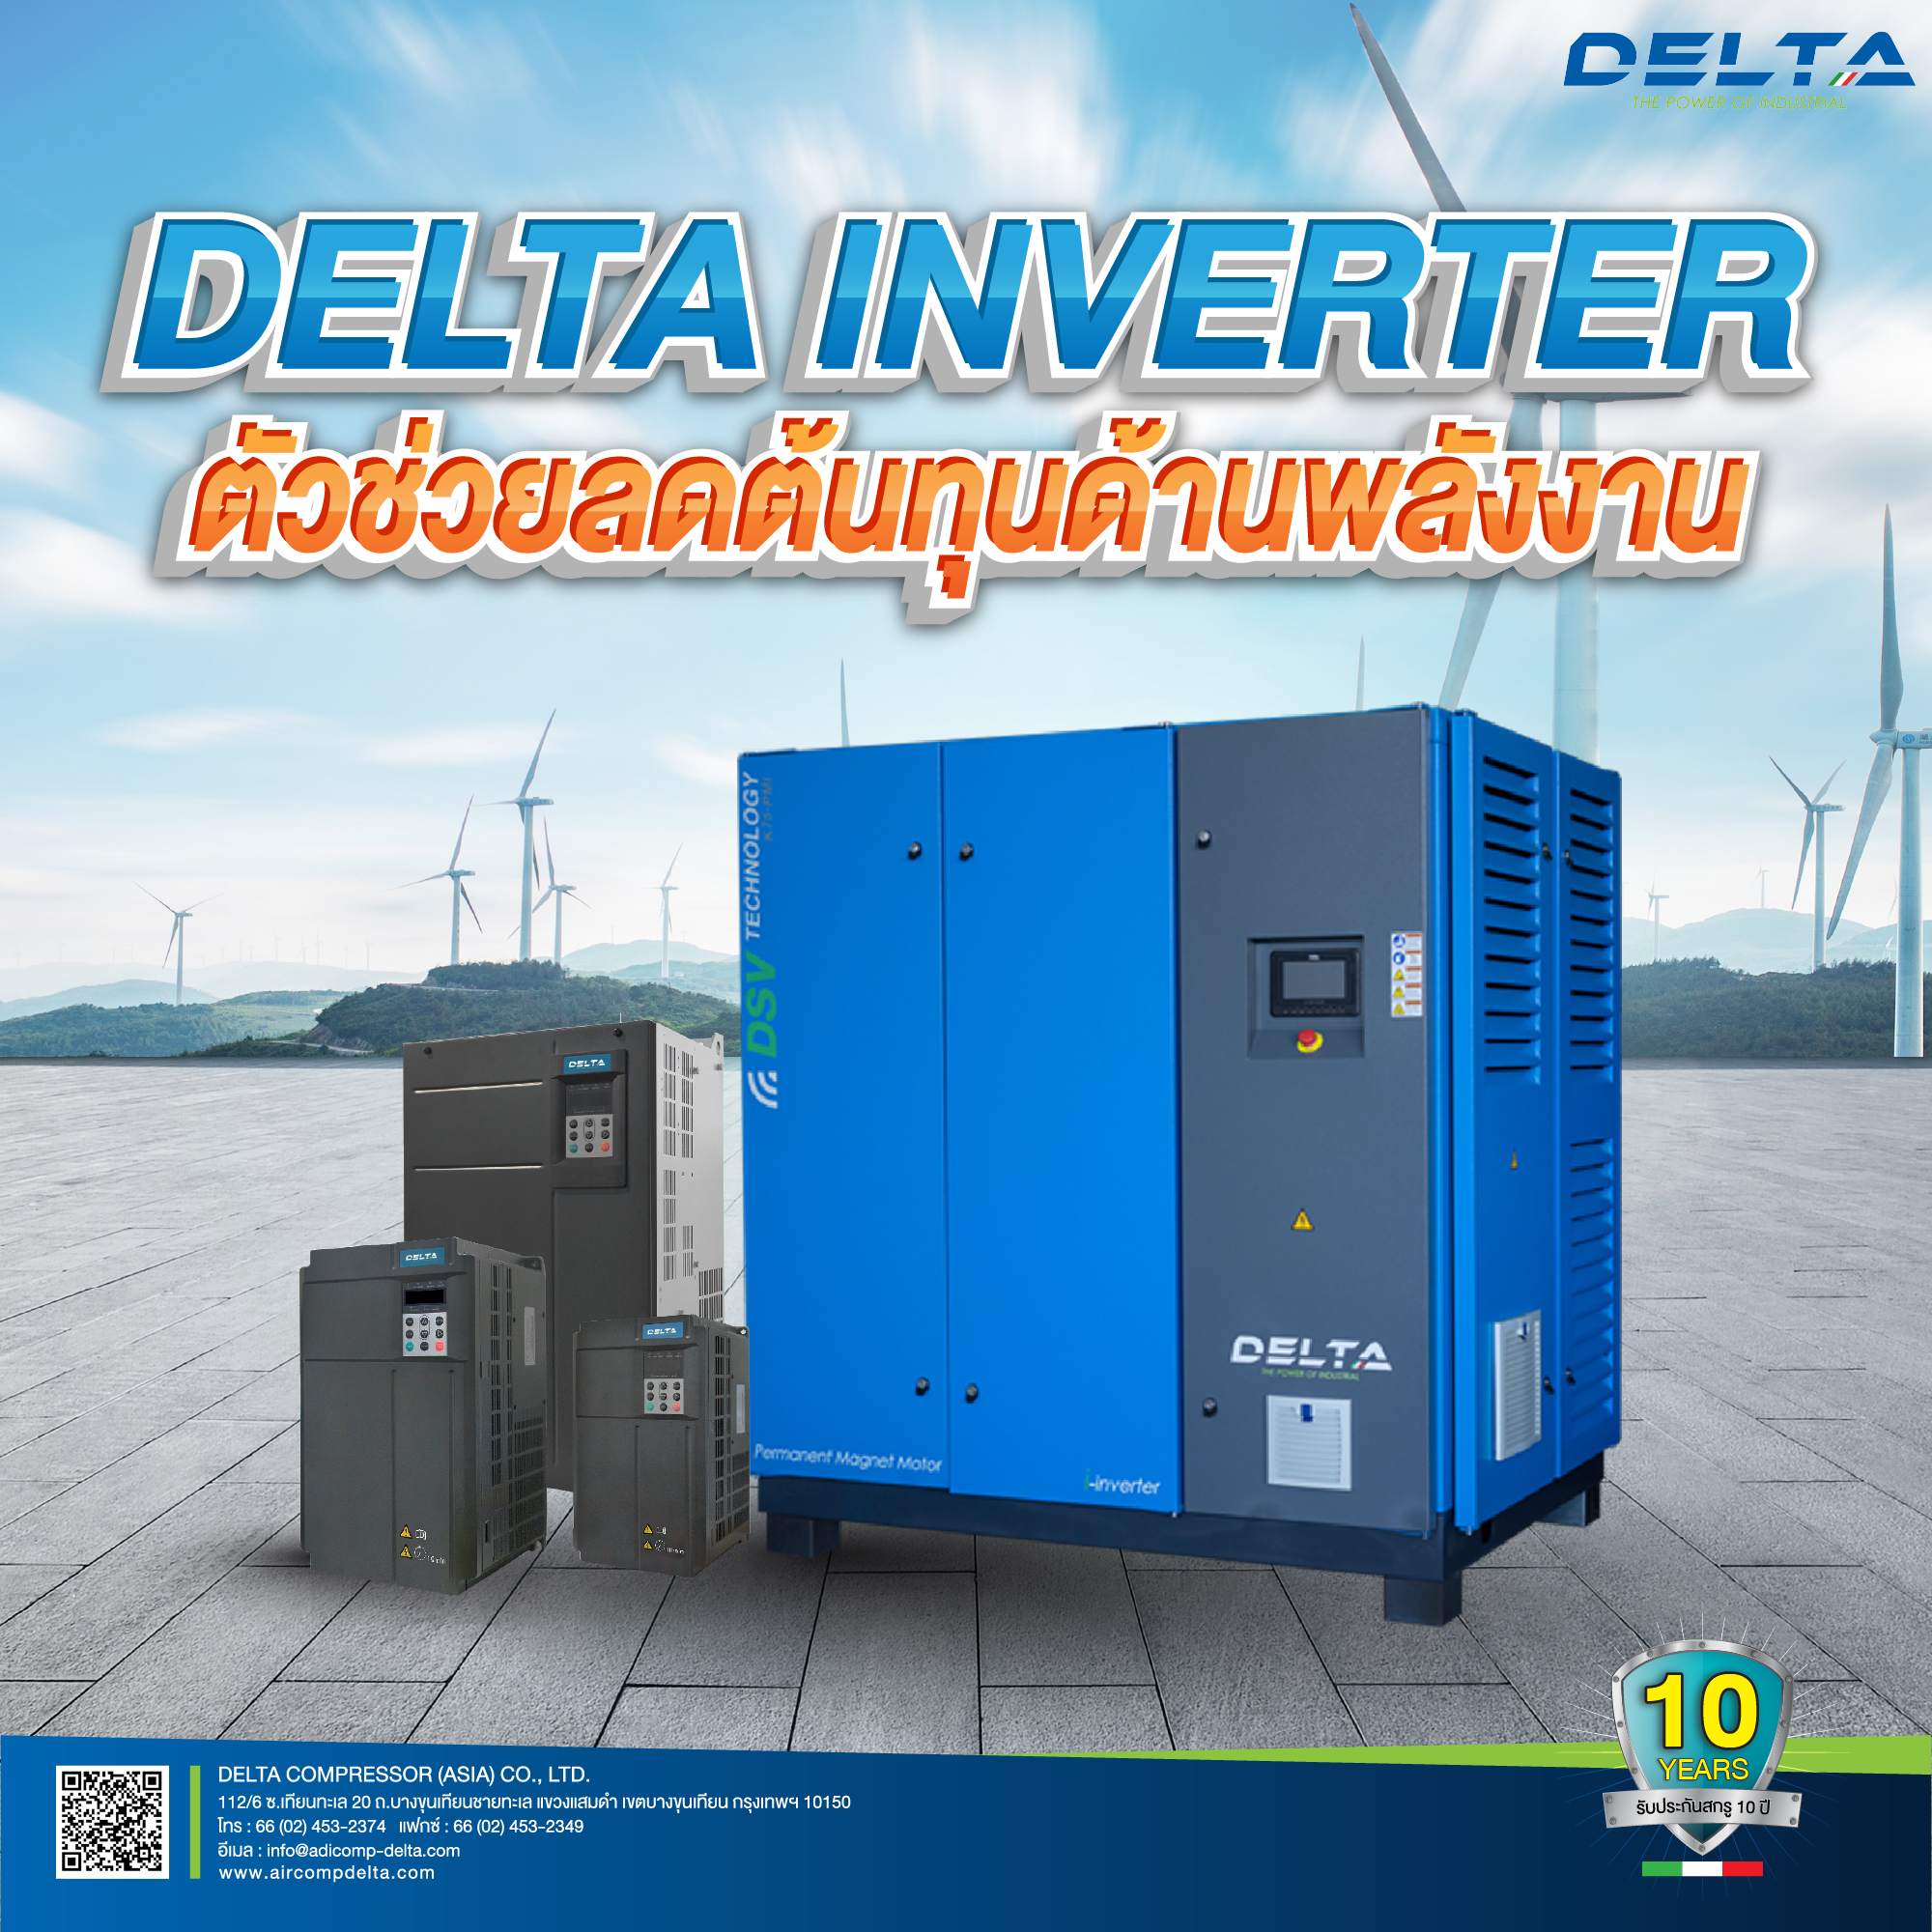 Delta inverter ตัวช่วยลดต้นทุนด้านพลังงาน